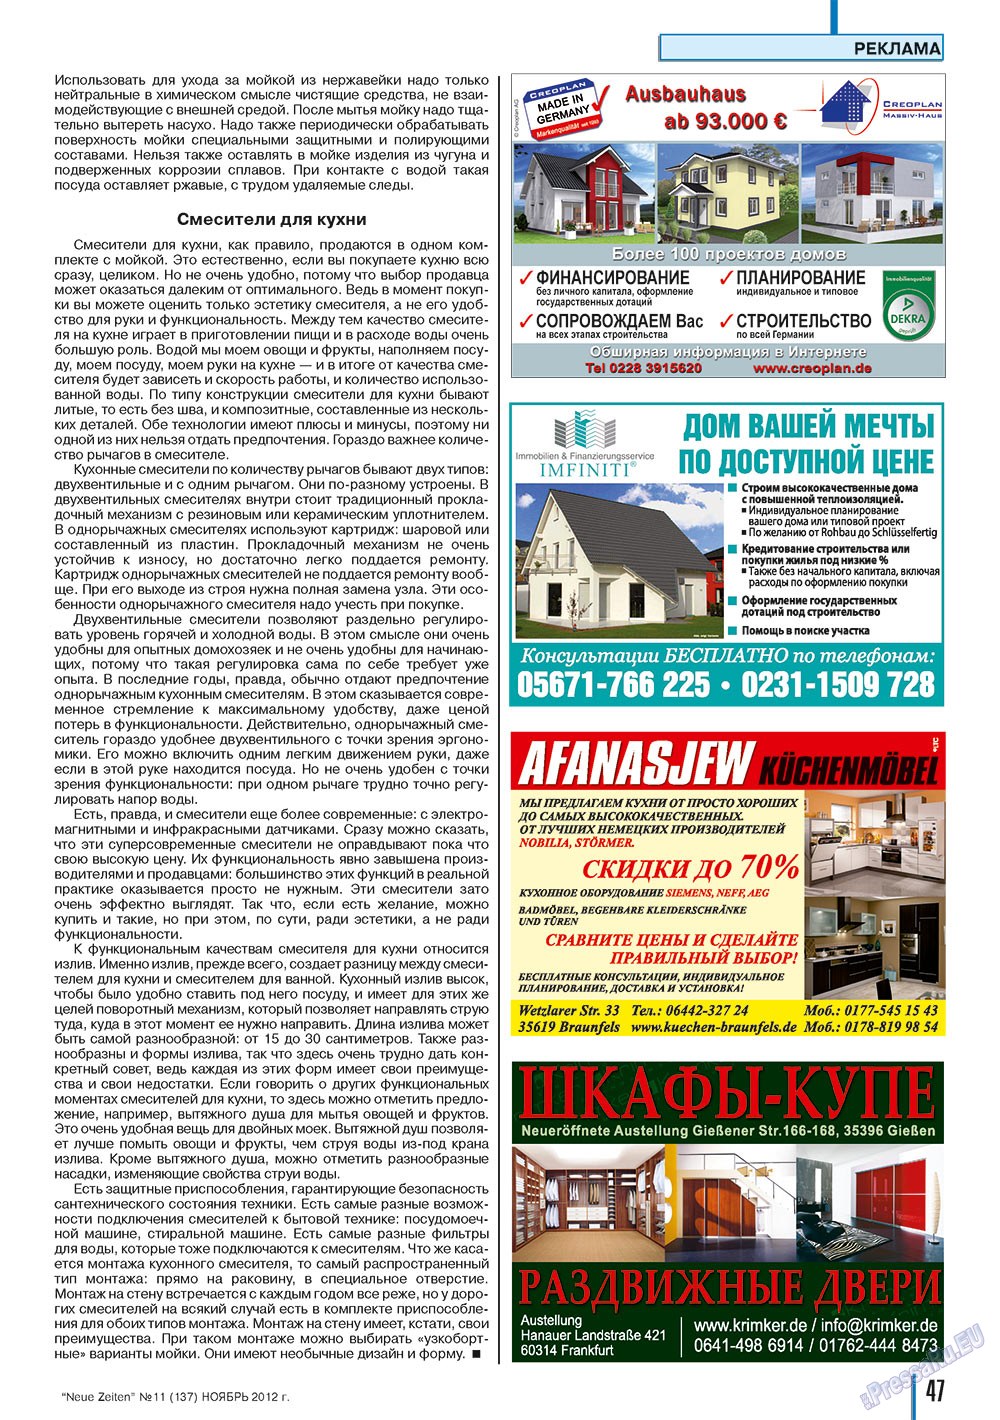 Neue Zeiten (журнал). 2012 год, номер 11, стр. 47